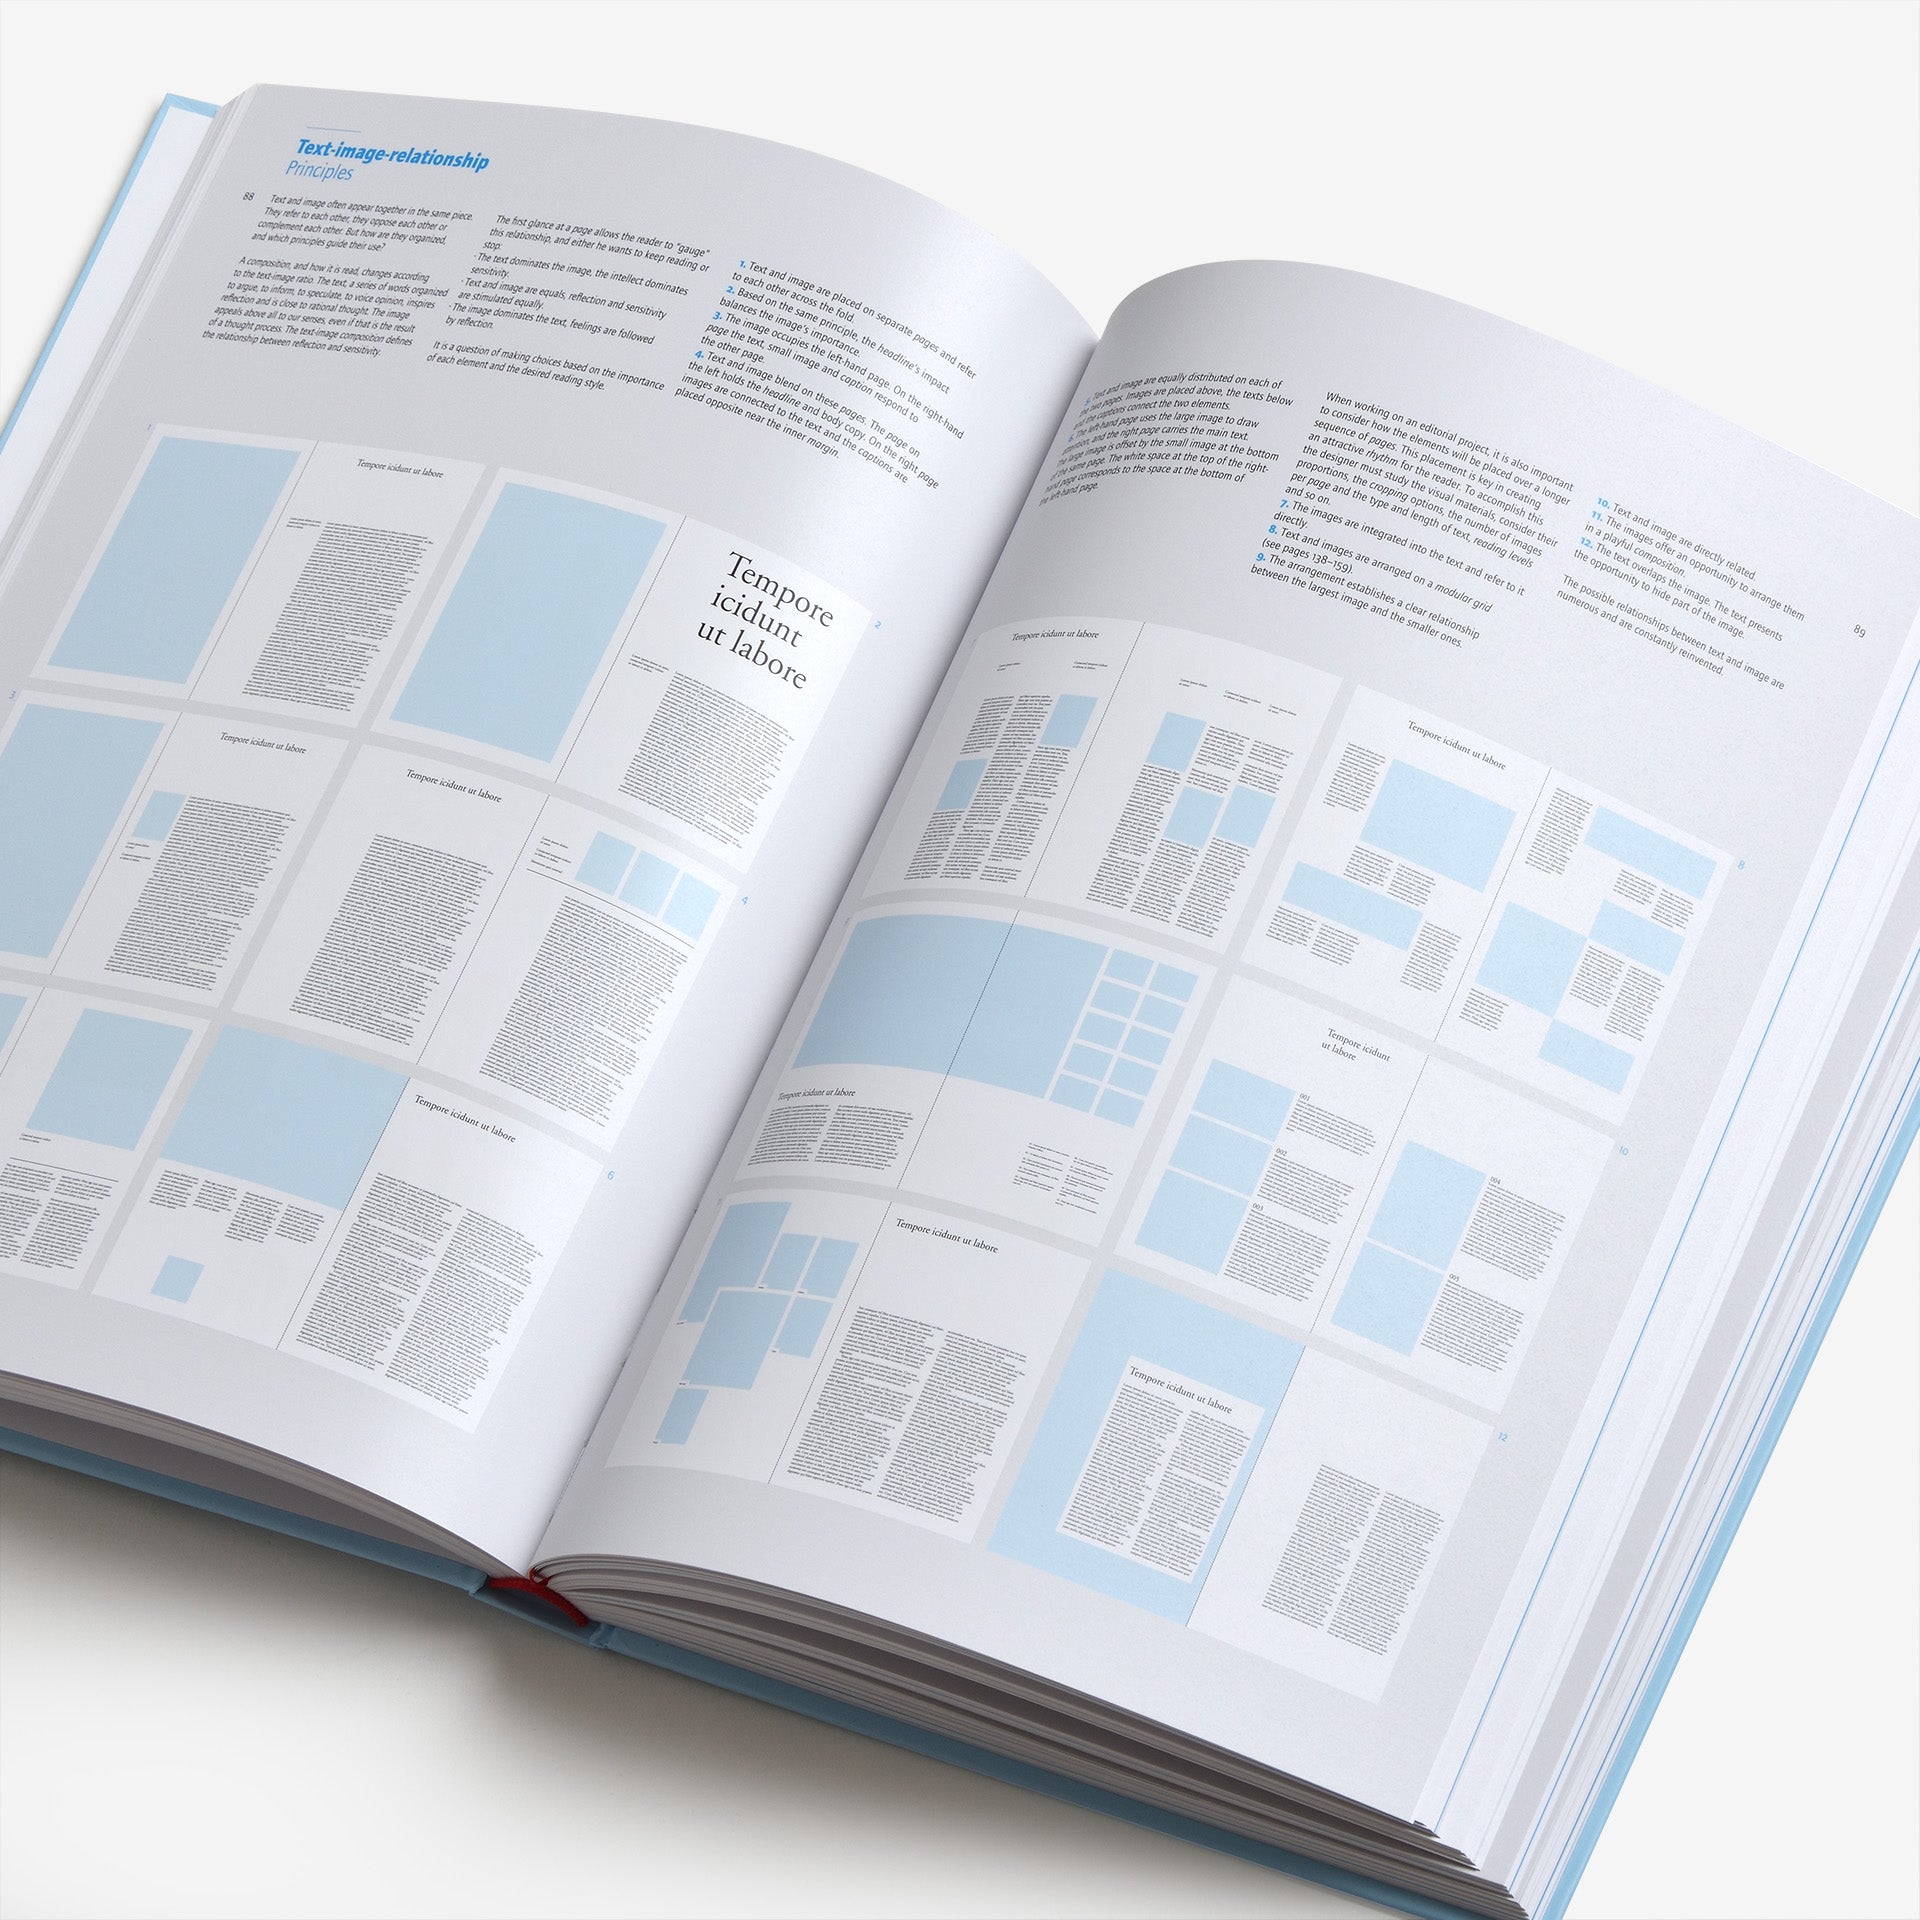 Design, Typography, etc: A Handbook